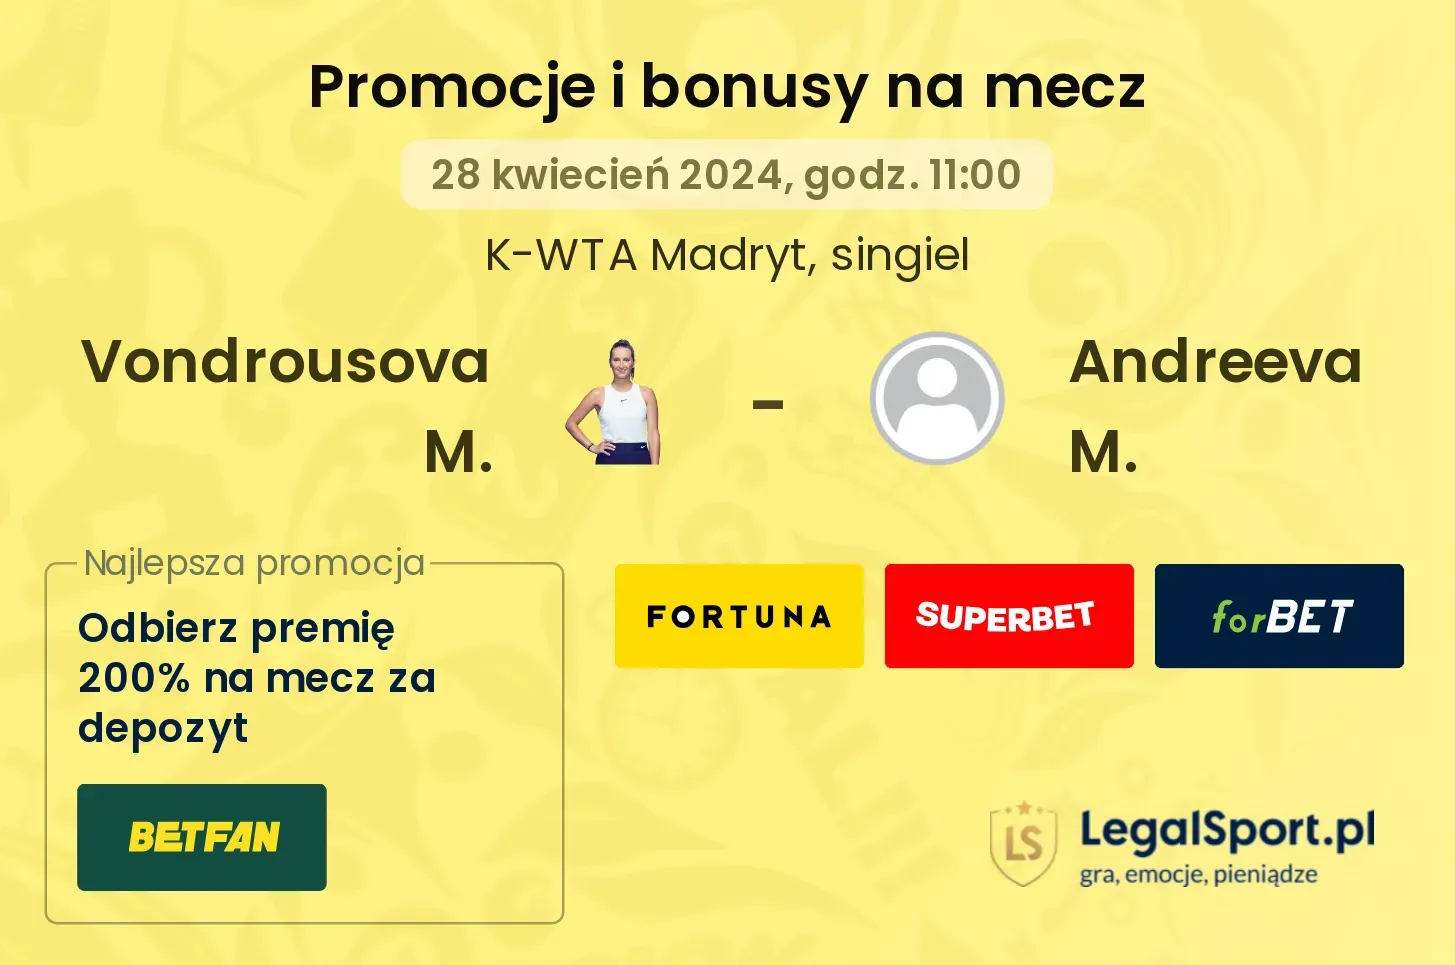 Vondrousova M. - Andreeva M. promocje bonusy na mecz